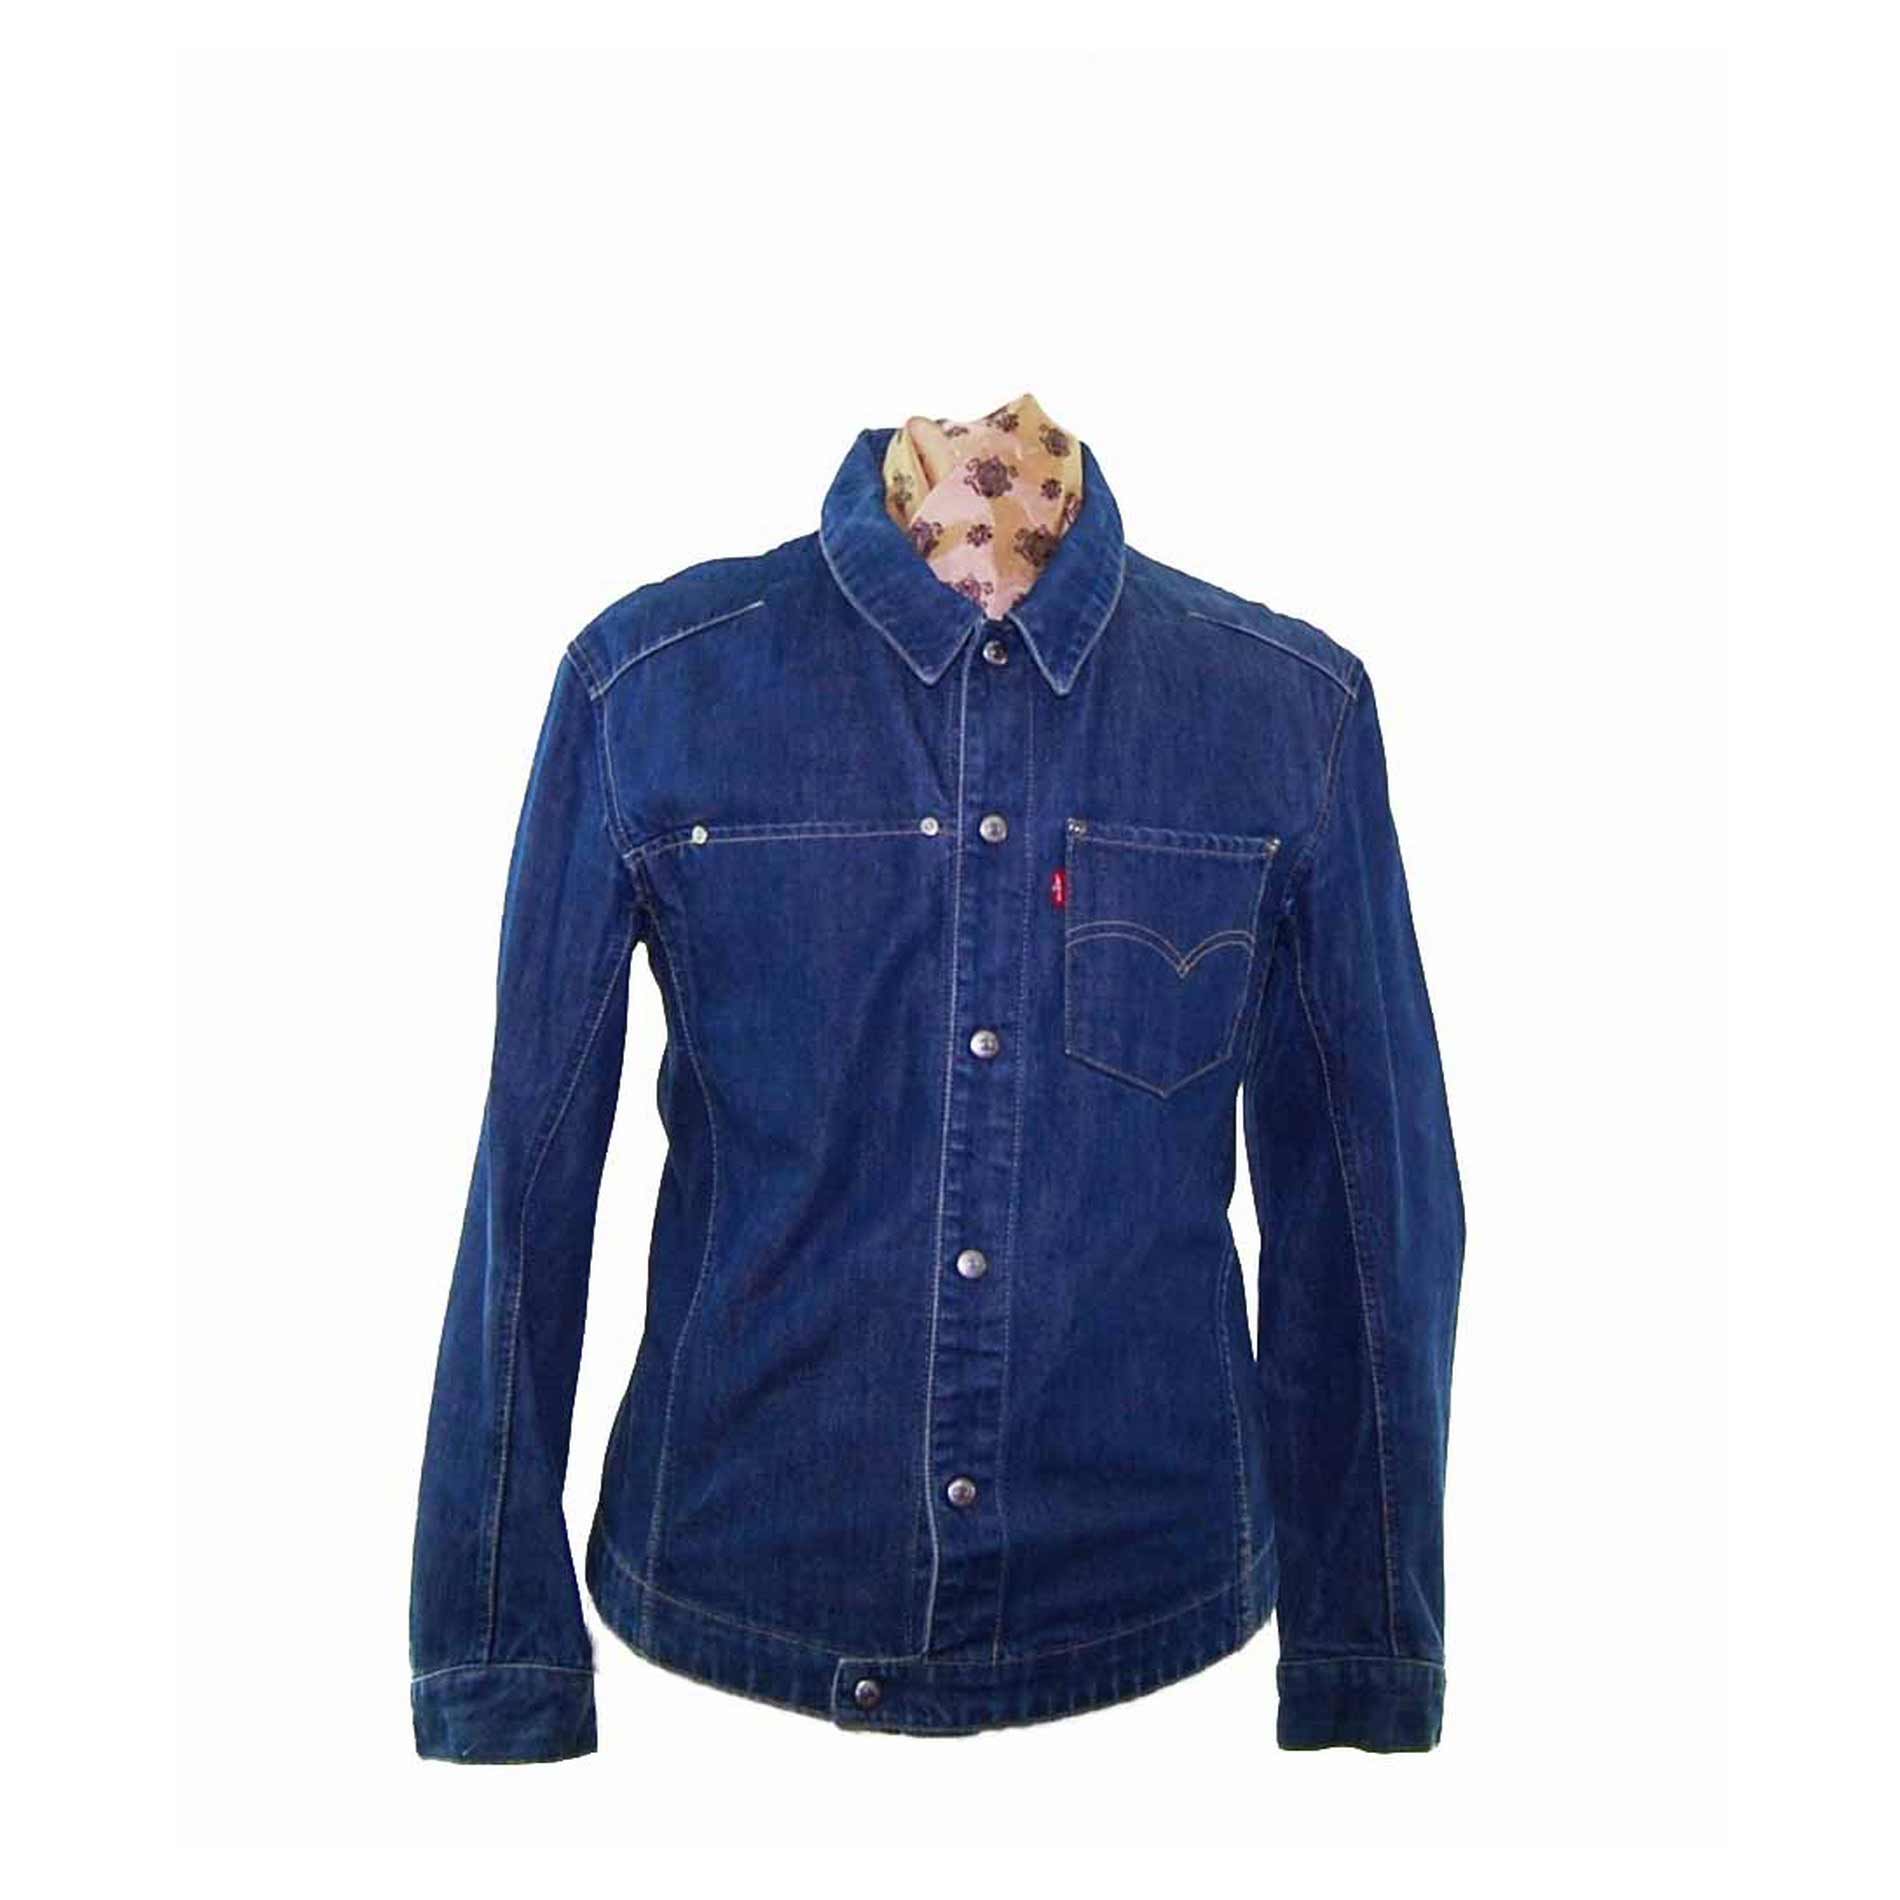 Levis Engineered Jeans Dark Blue Denim Jacket - Blue 17 Vintage Clothing